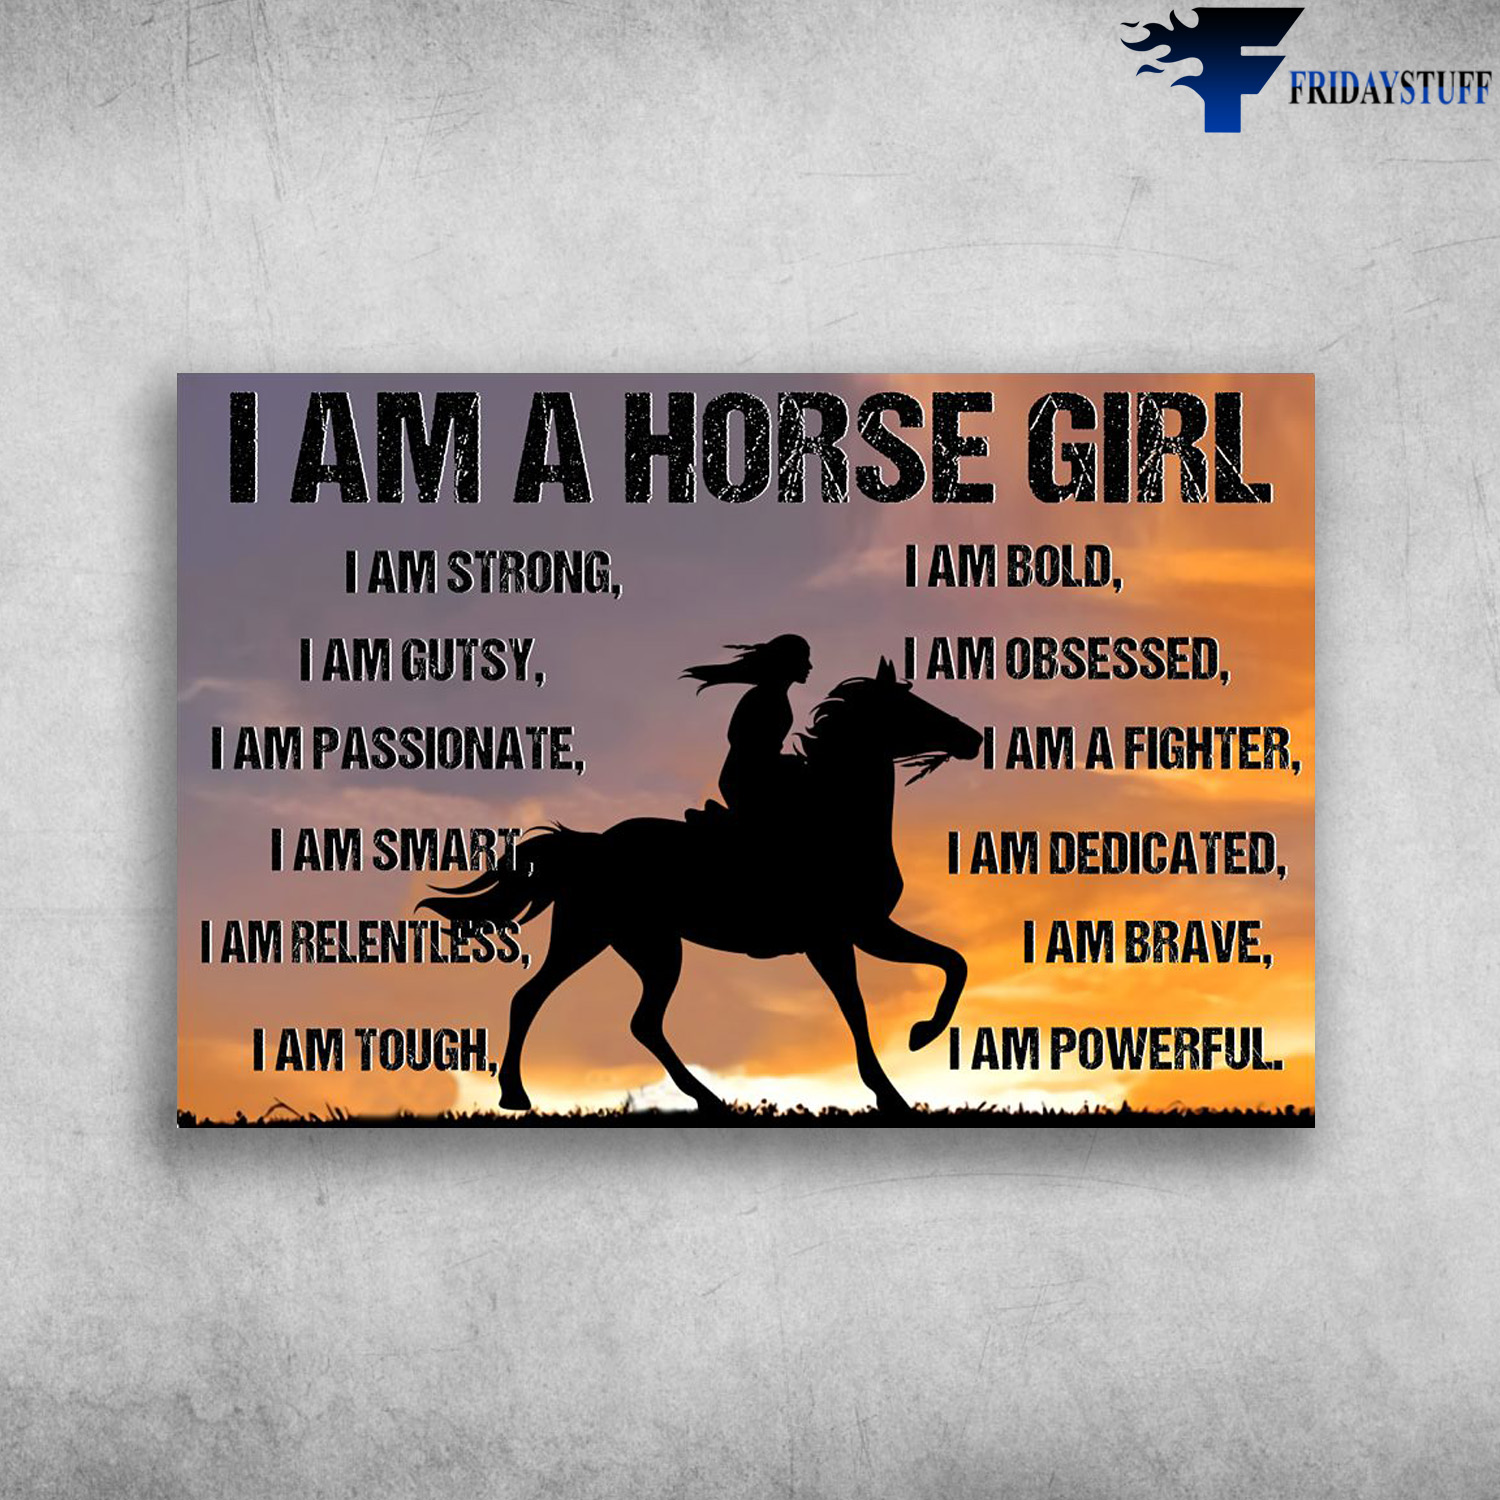 Horse Girl - I Am A Horse Girl, I Am Strong, I Am Gutsy, I Am Passionate, I Am Obsessed, I Am Fighter, I Am Smart, I Am Dedicated, I Am Relentless, I Am Brave, I Am Tough, I A Powerful